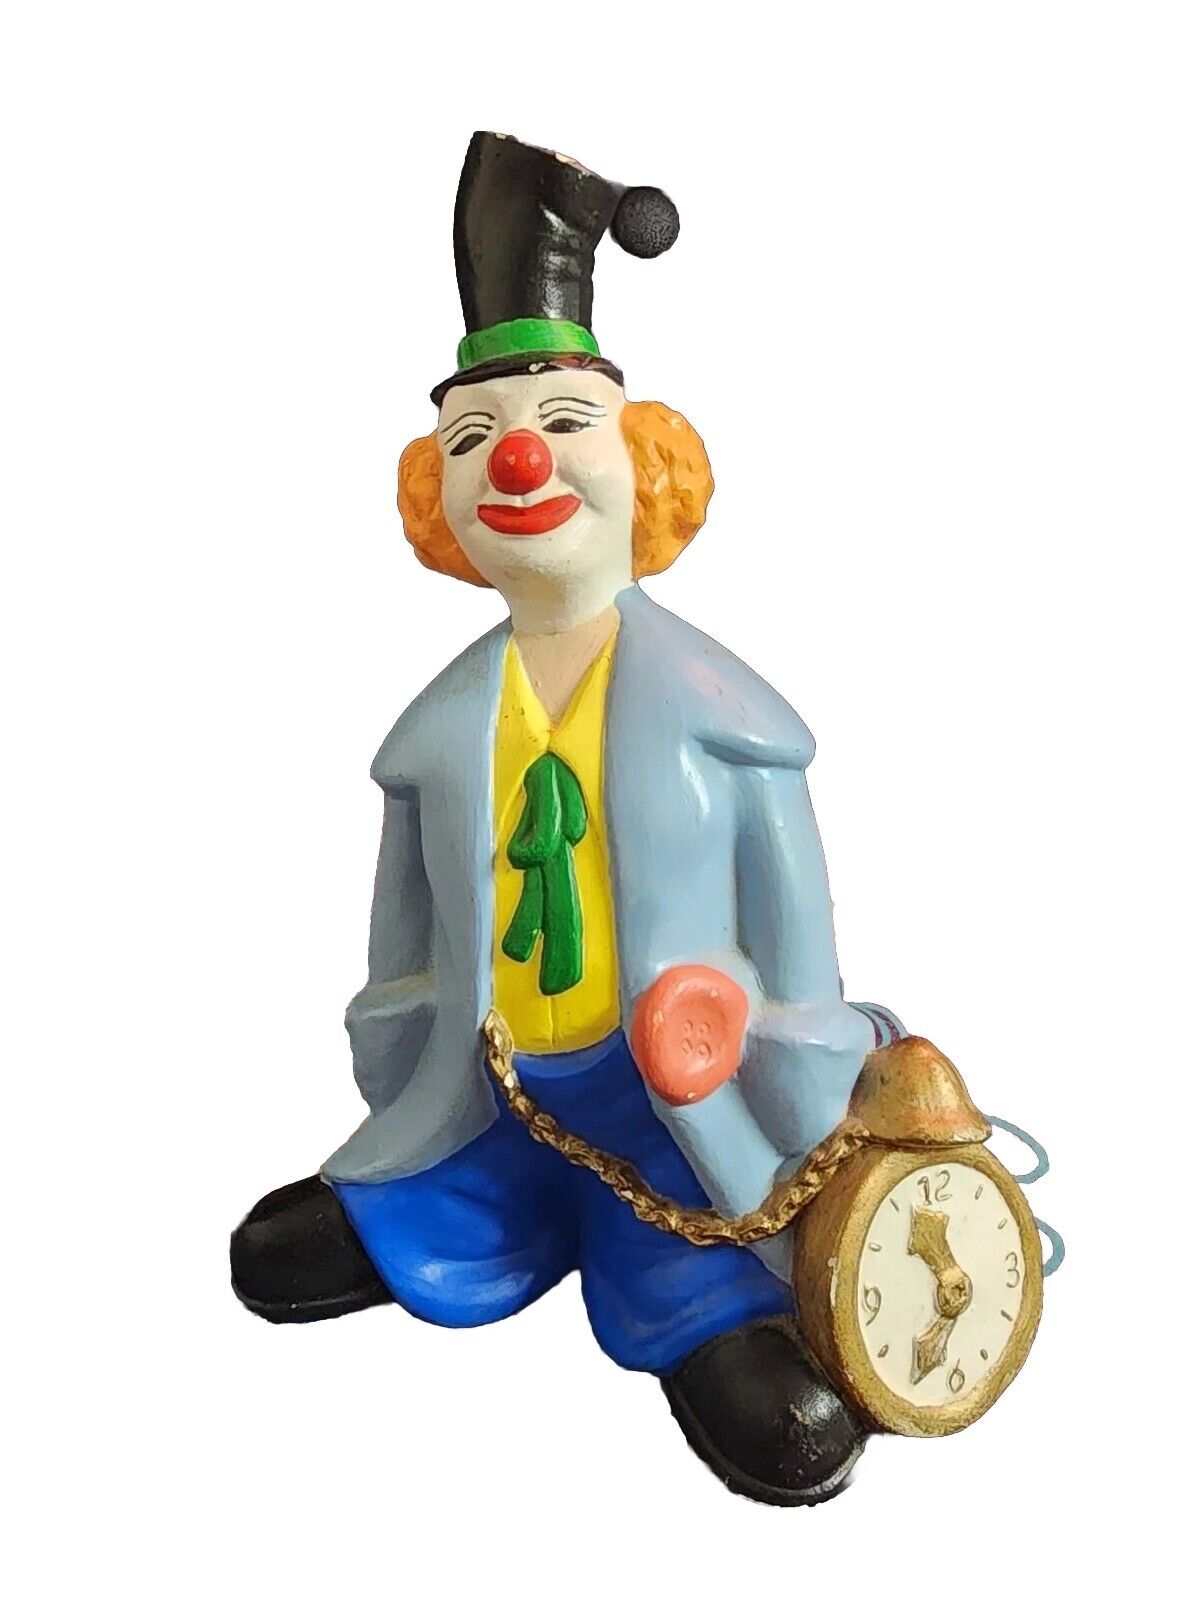 Vintage 1980s Clown Holding Clock Art Figurine Collectible